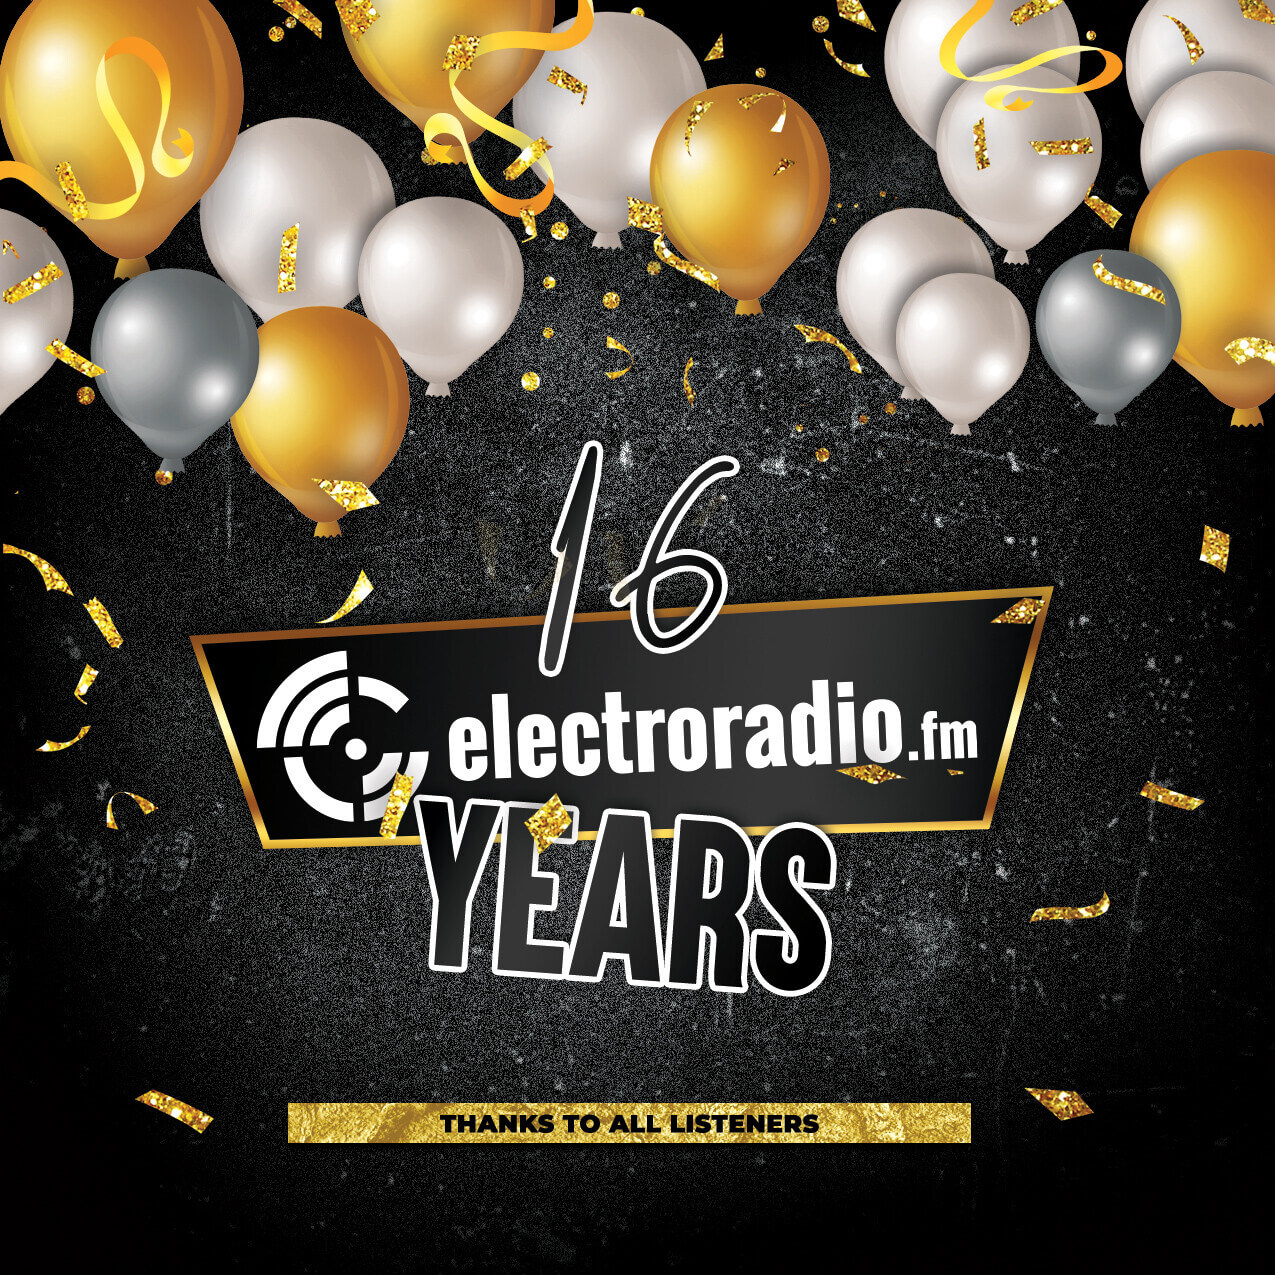 16 years electroradio.fm